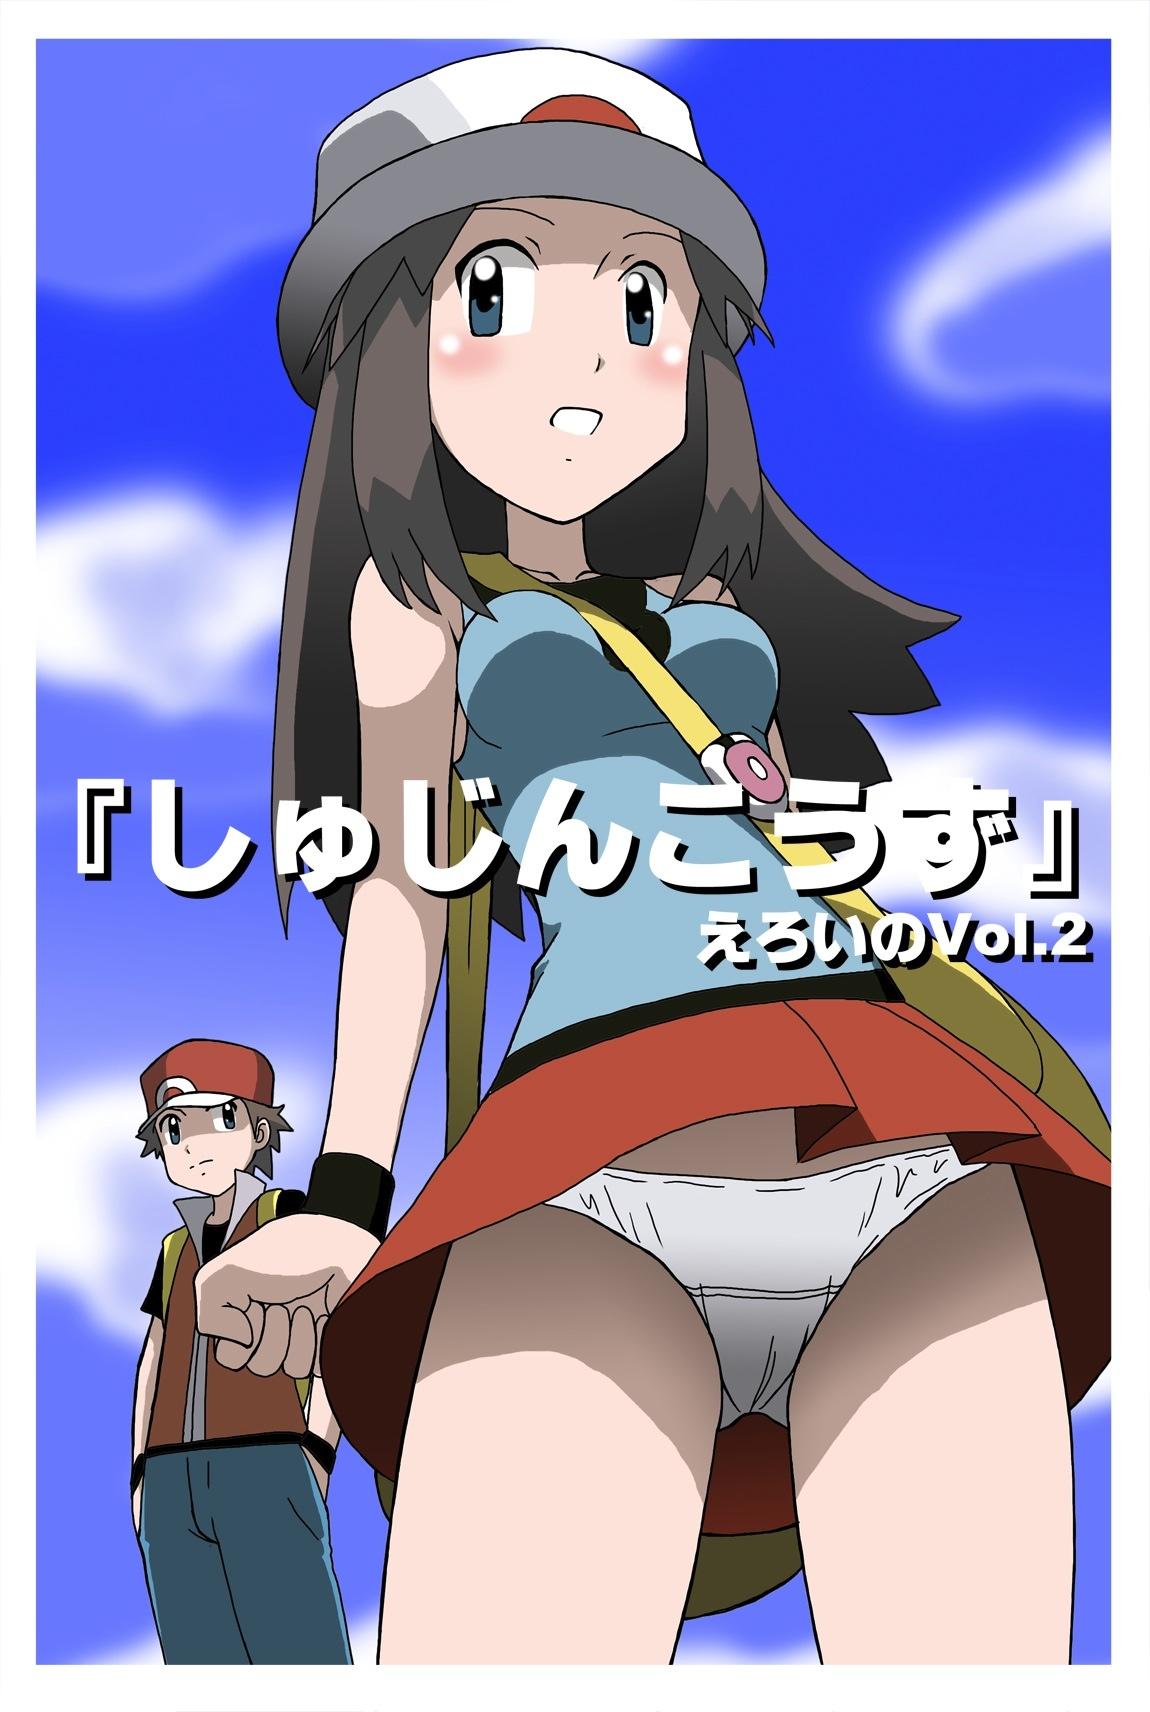 Raw 「Shujinkouzu」 Eroi no Vol.2 - Pokemon Super Hot Porn - Picture 1